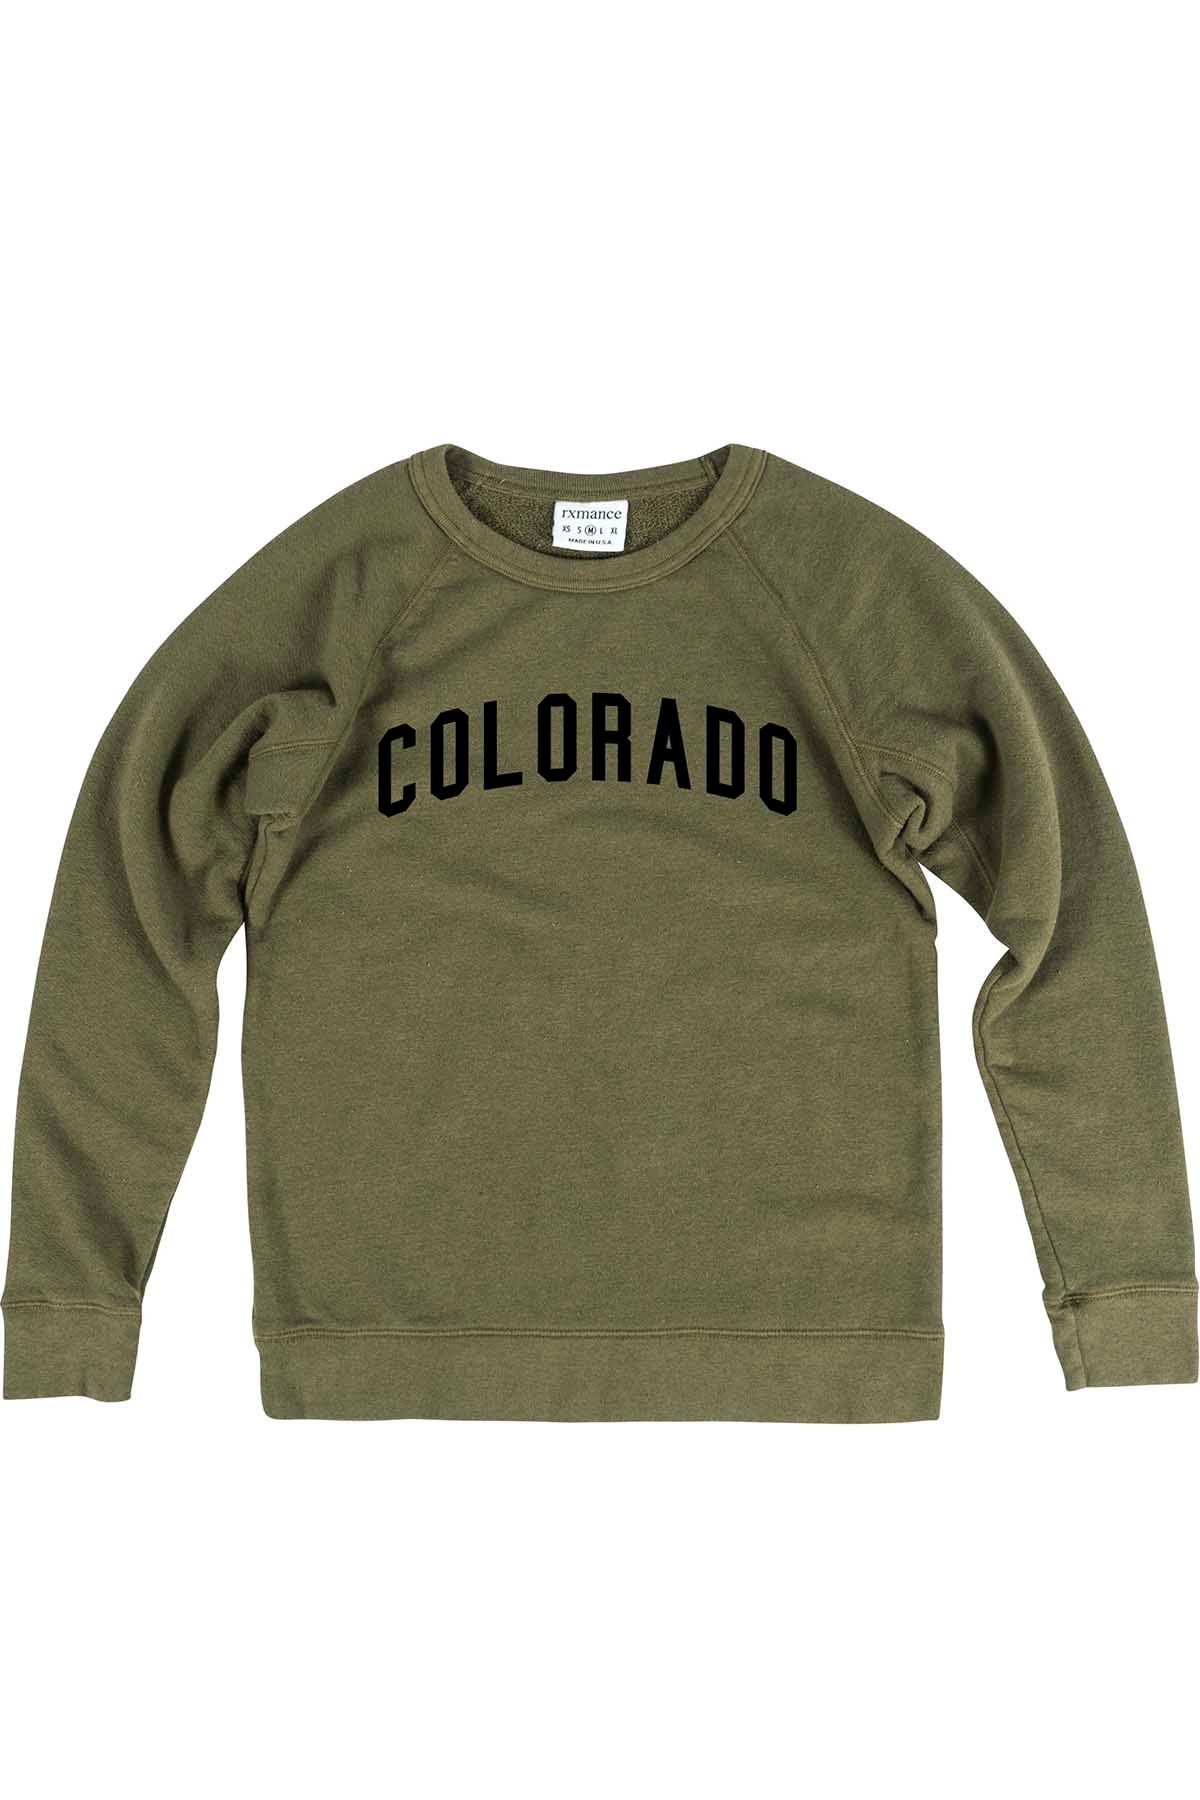 Rxmance Unisex Army Green Colorado Sweatshirt